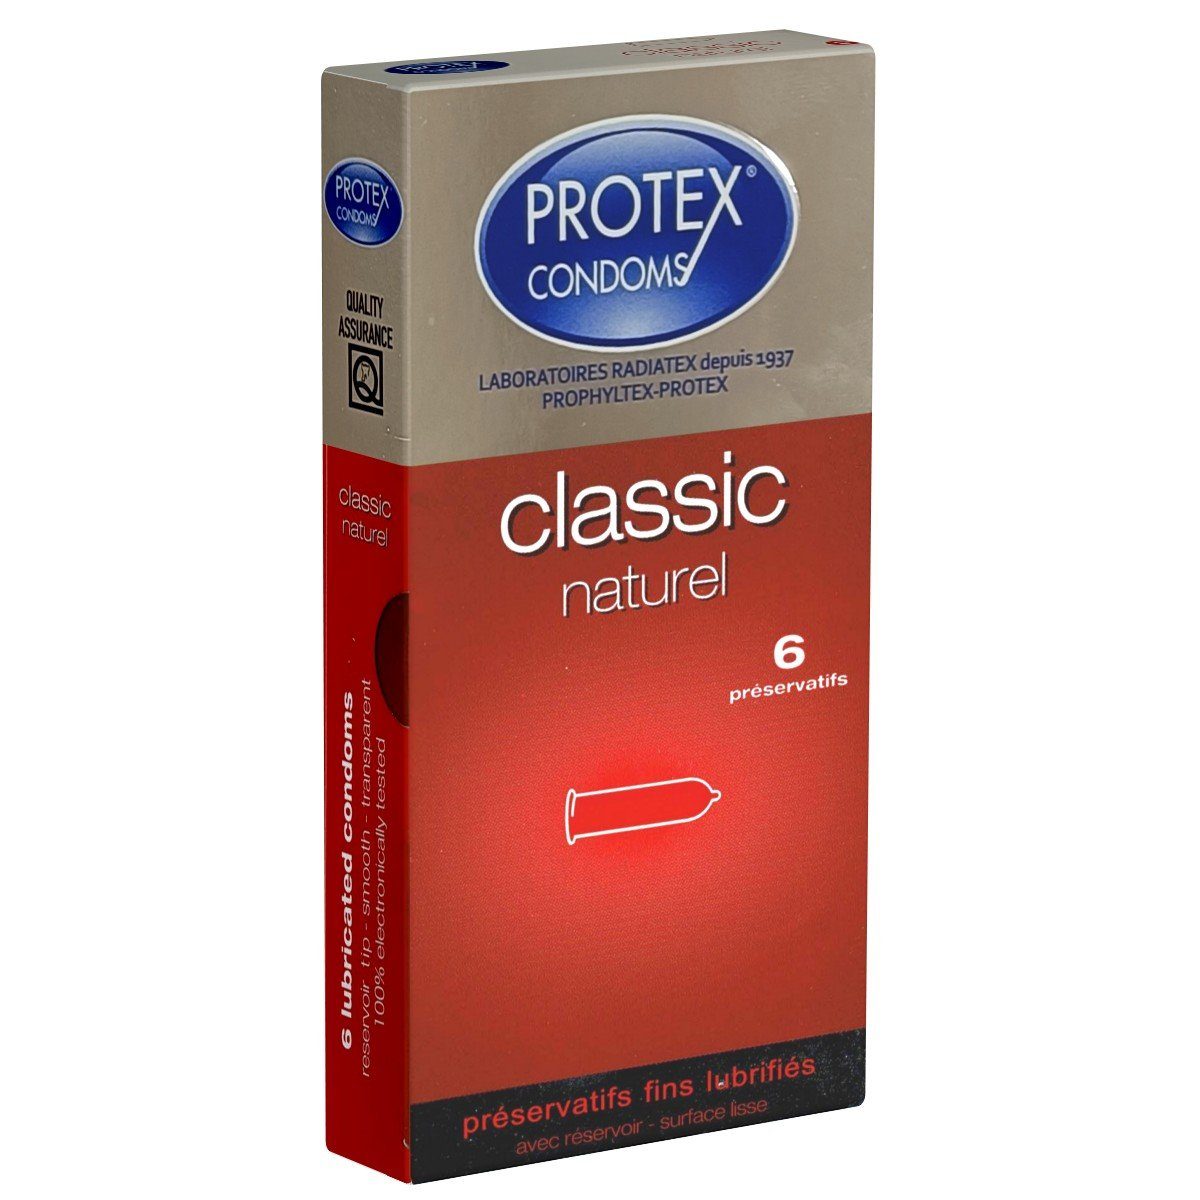 Protex Kondome CLASSIC Naturel Packung mit, 6 St., klassische Kondome aus Frankreich